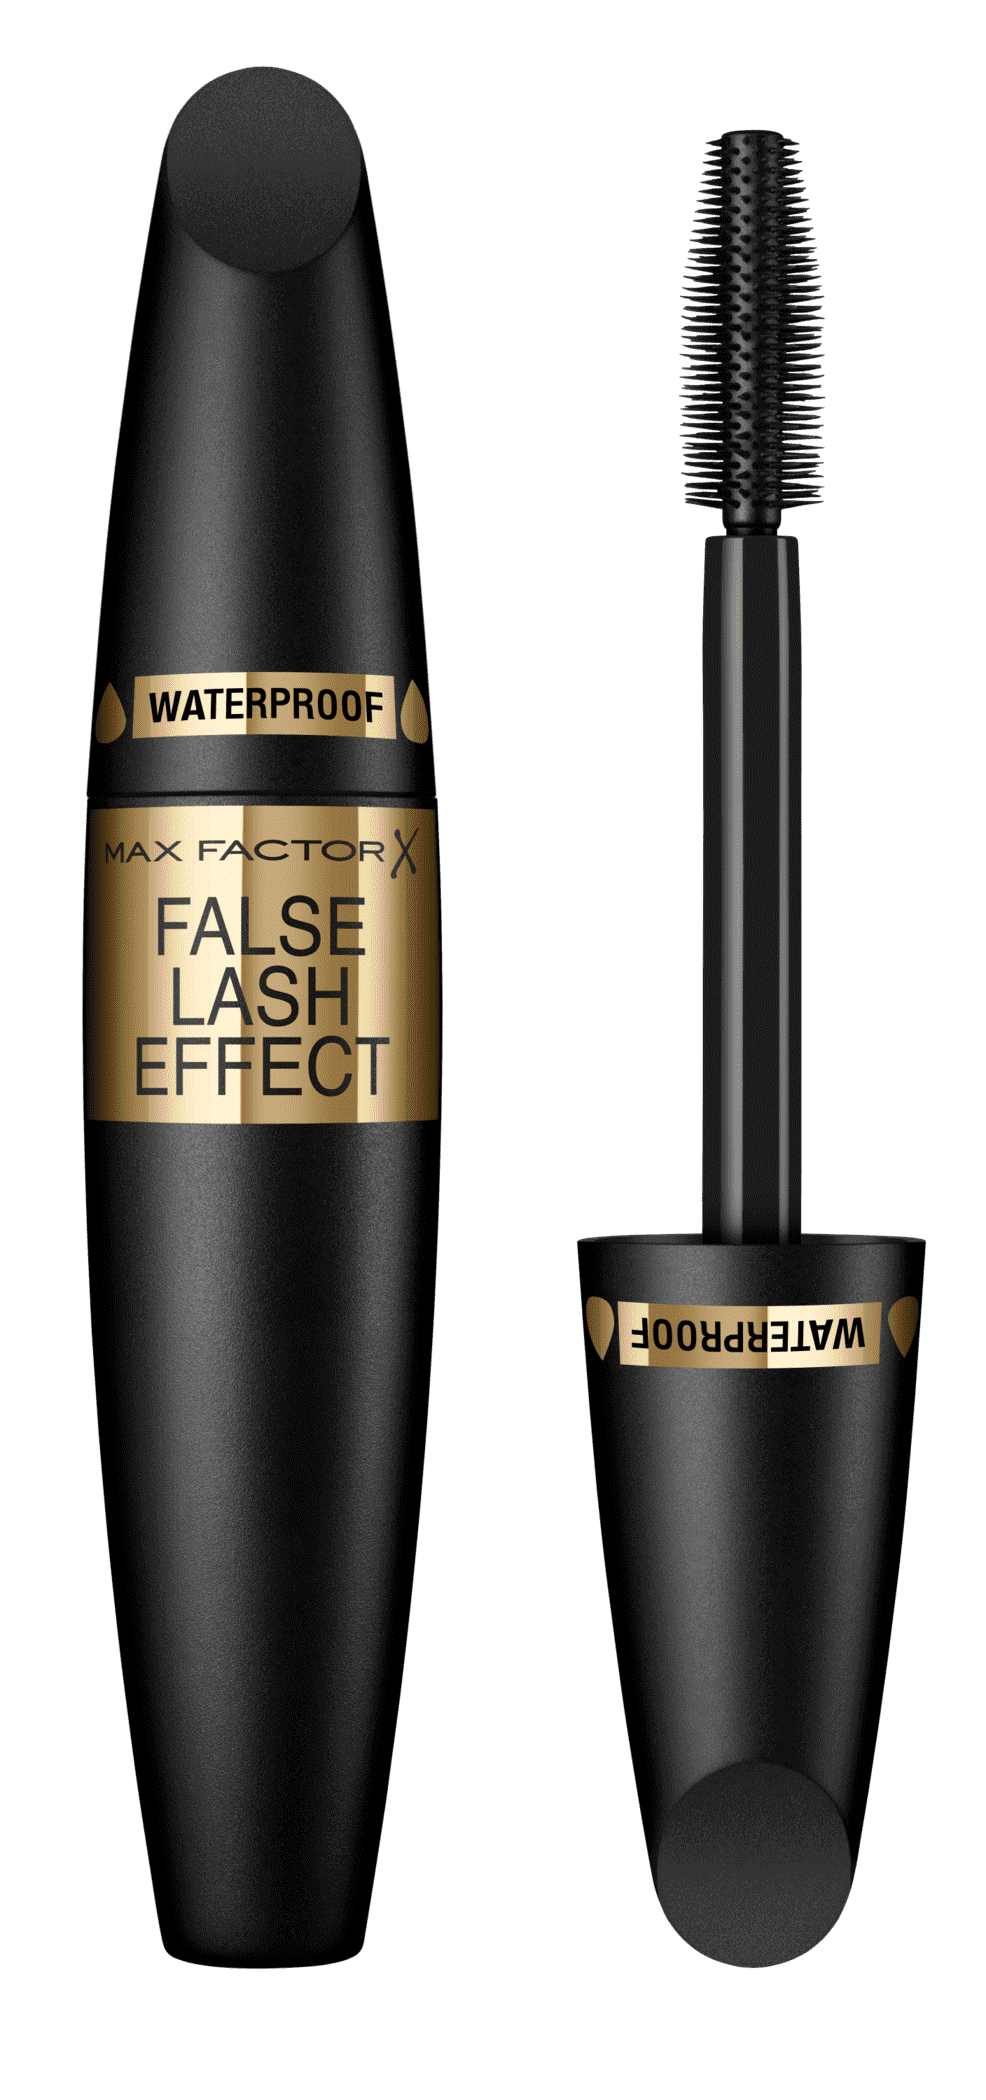 Max Factor_Base Business_False Lash Effect Mascara Waterproof_Packshot_Open_CMYK_HighRes.png